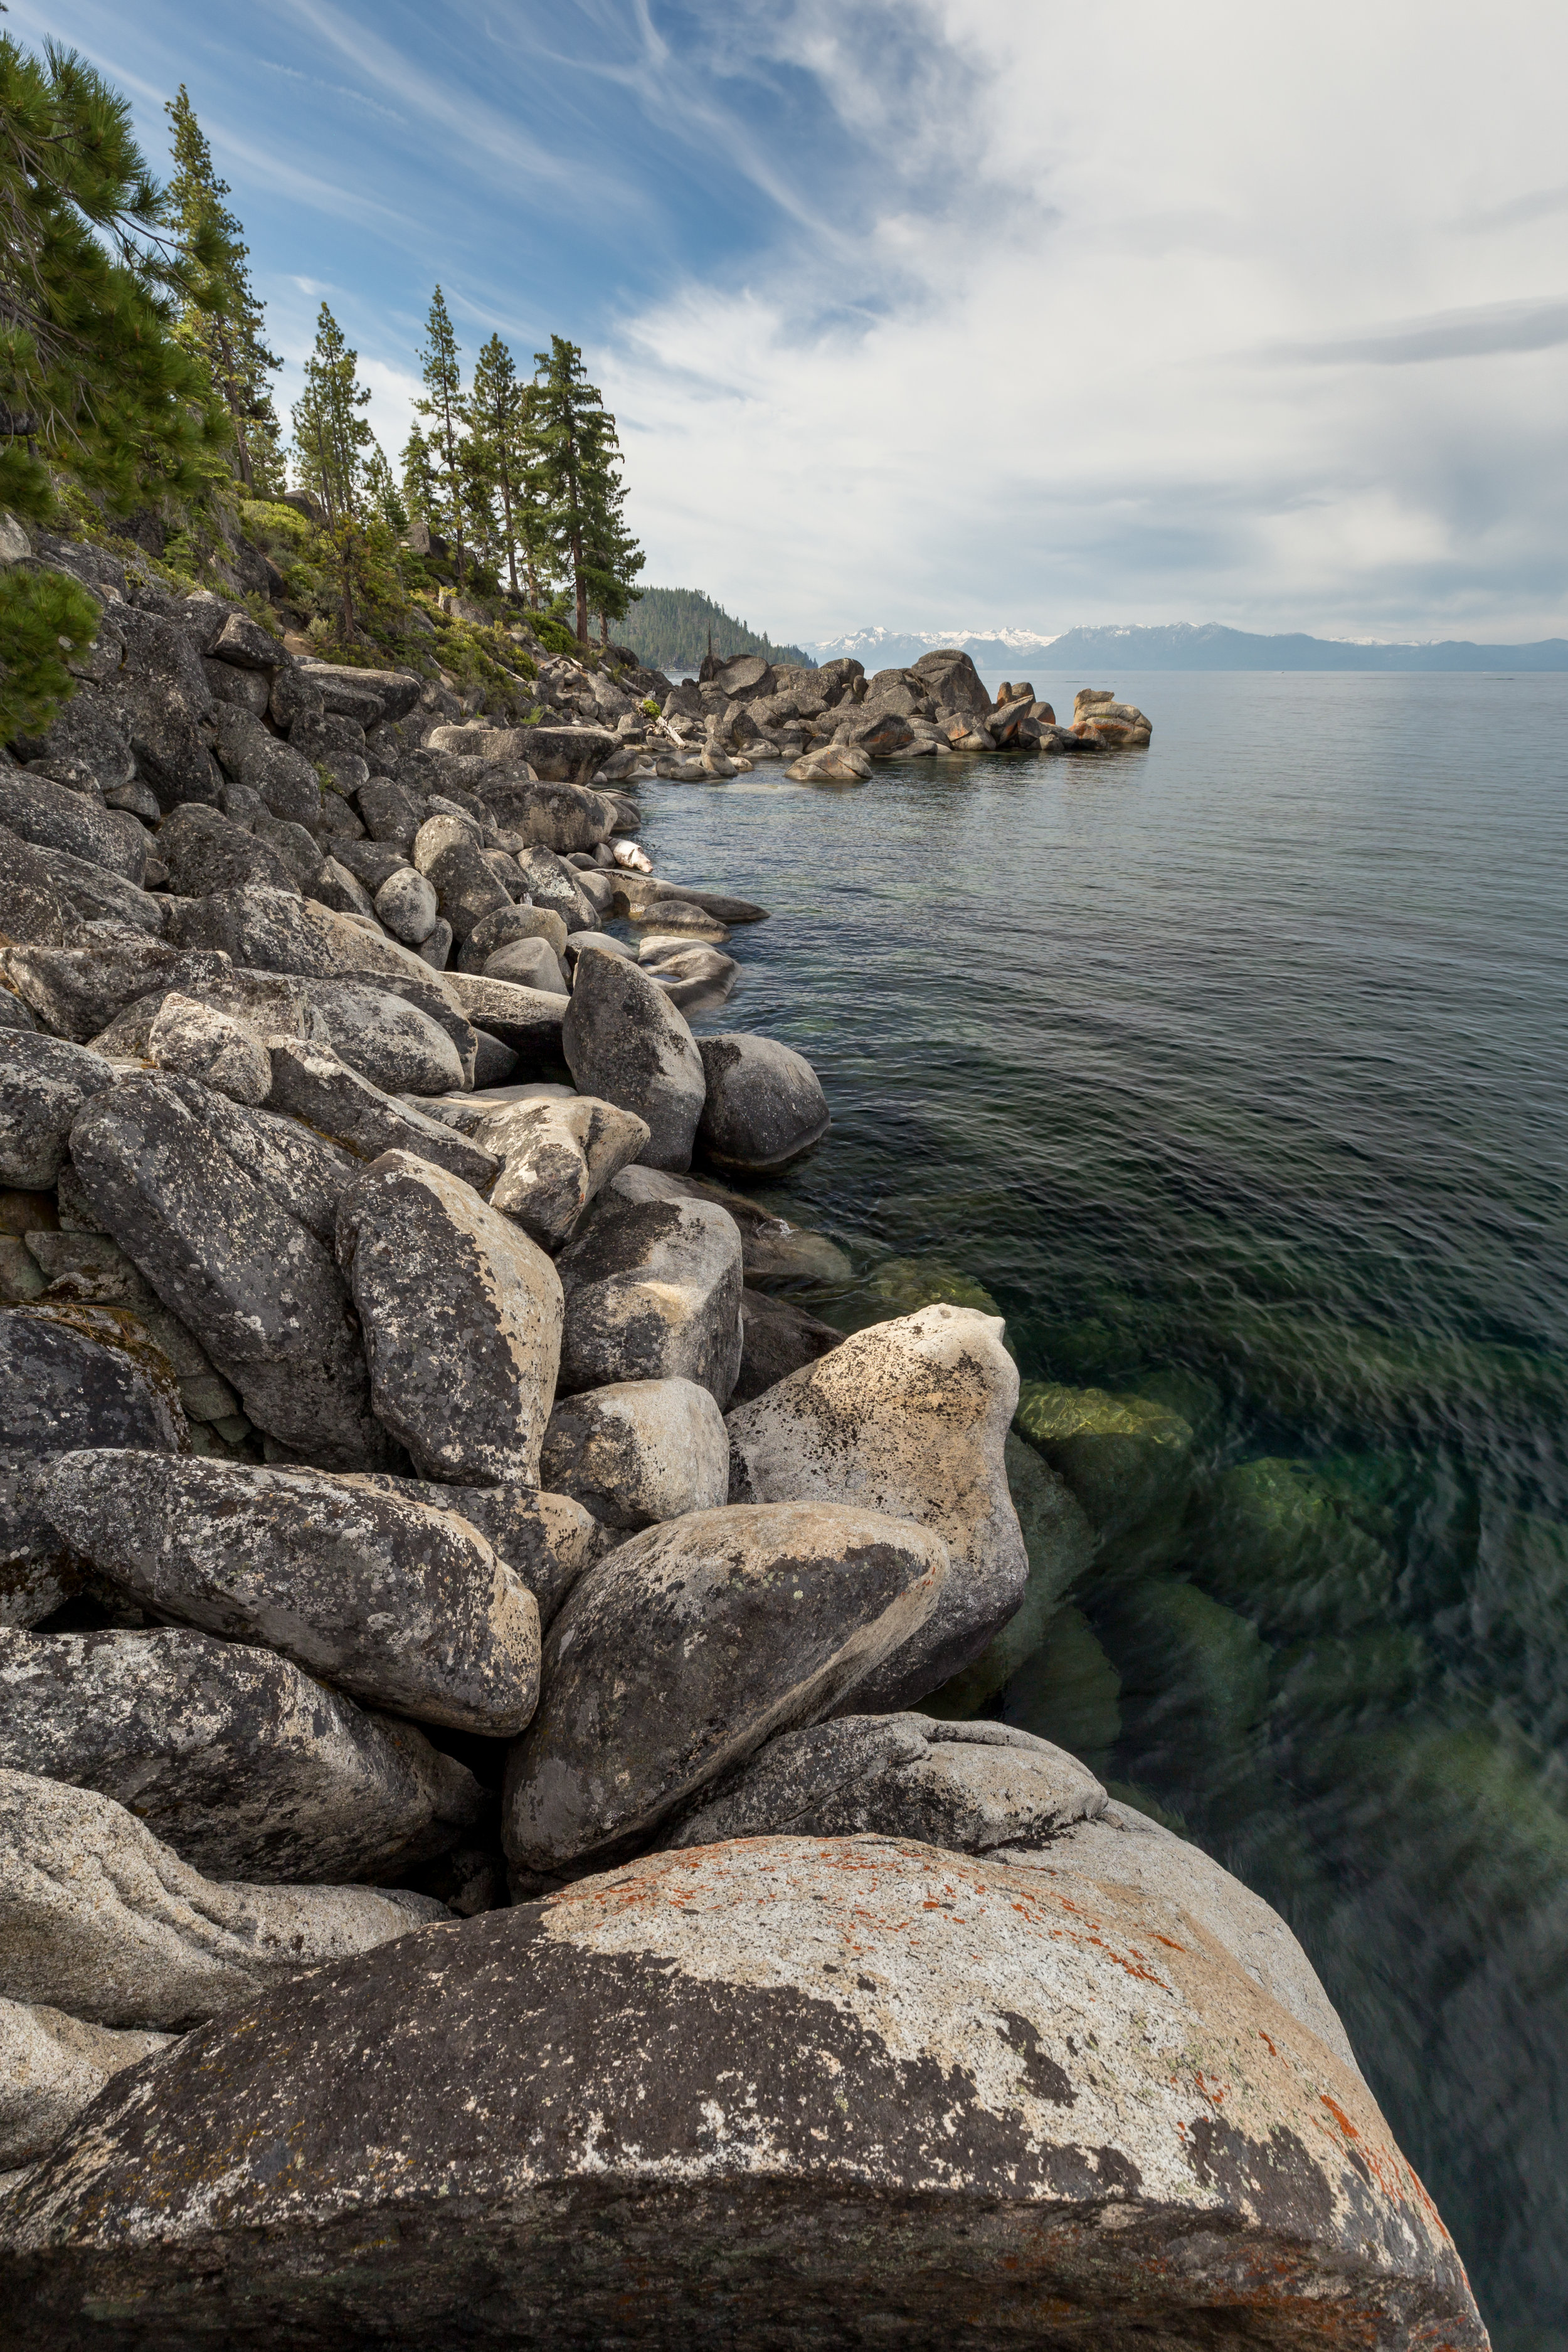 Tahoe Shore. Lake Tahoe, Nevada (July 2019)